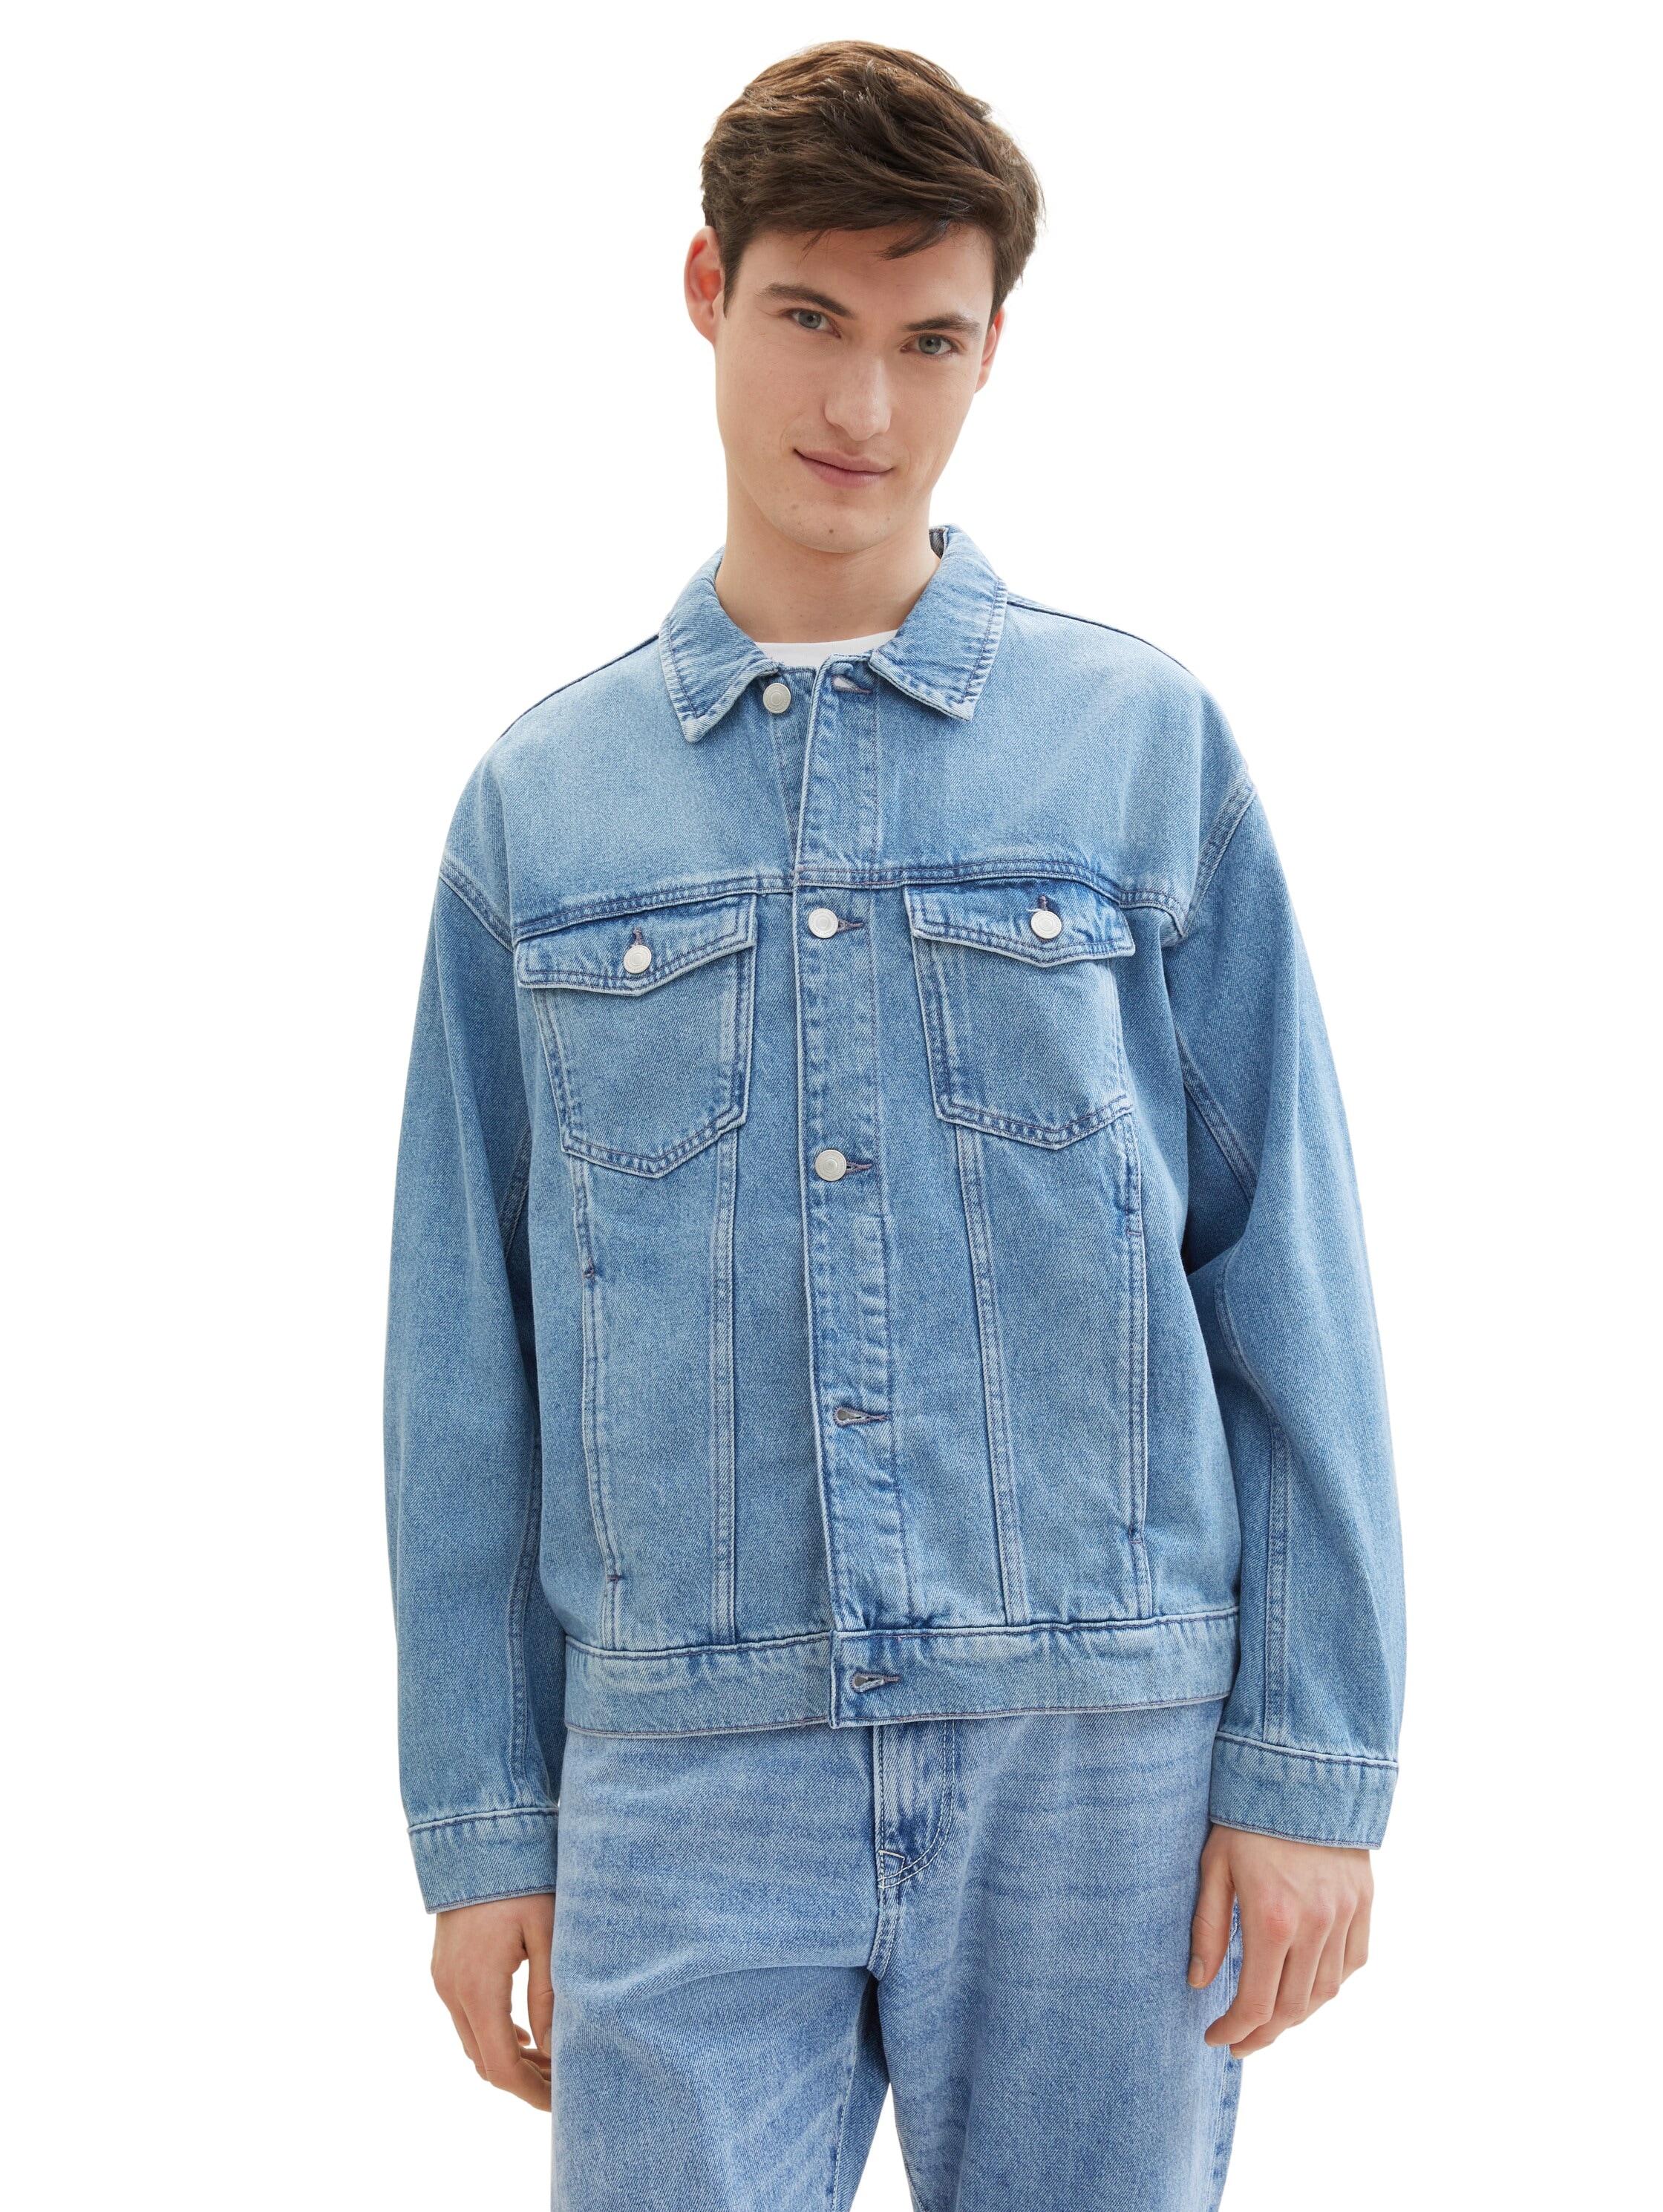 Jeansjacke, ohne Kapuze, mit Knopfleiste